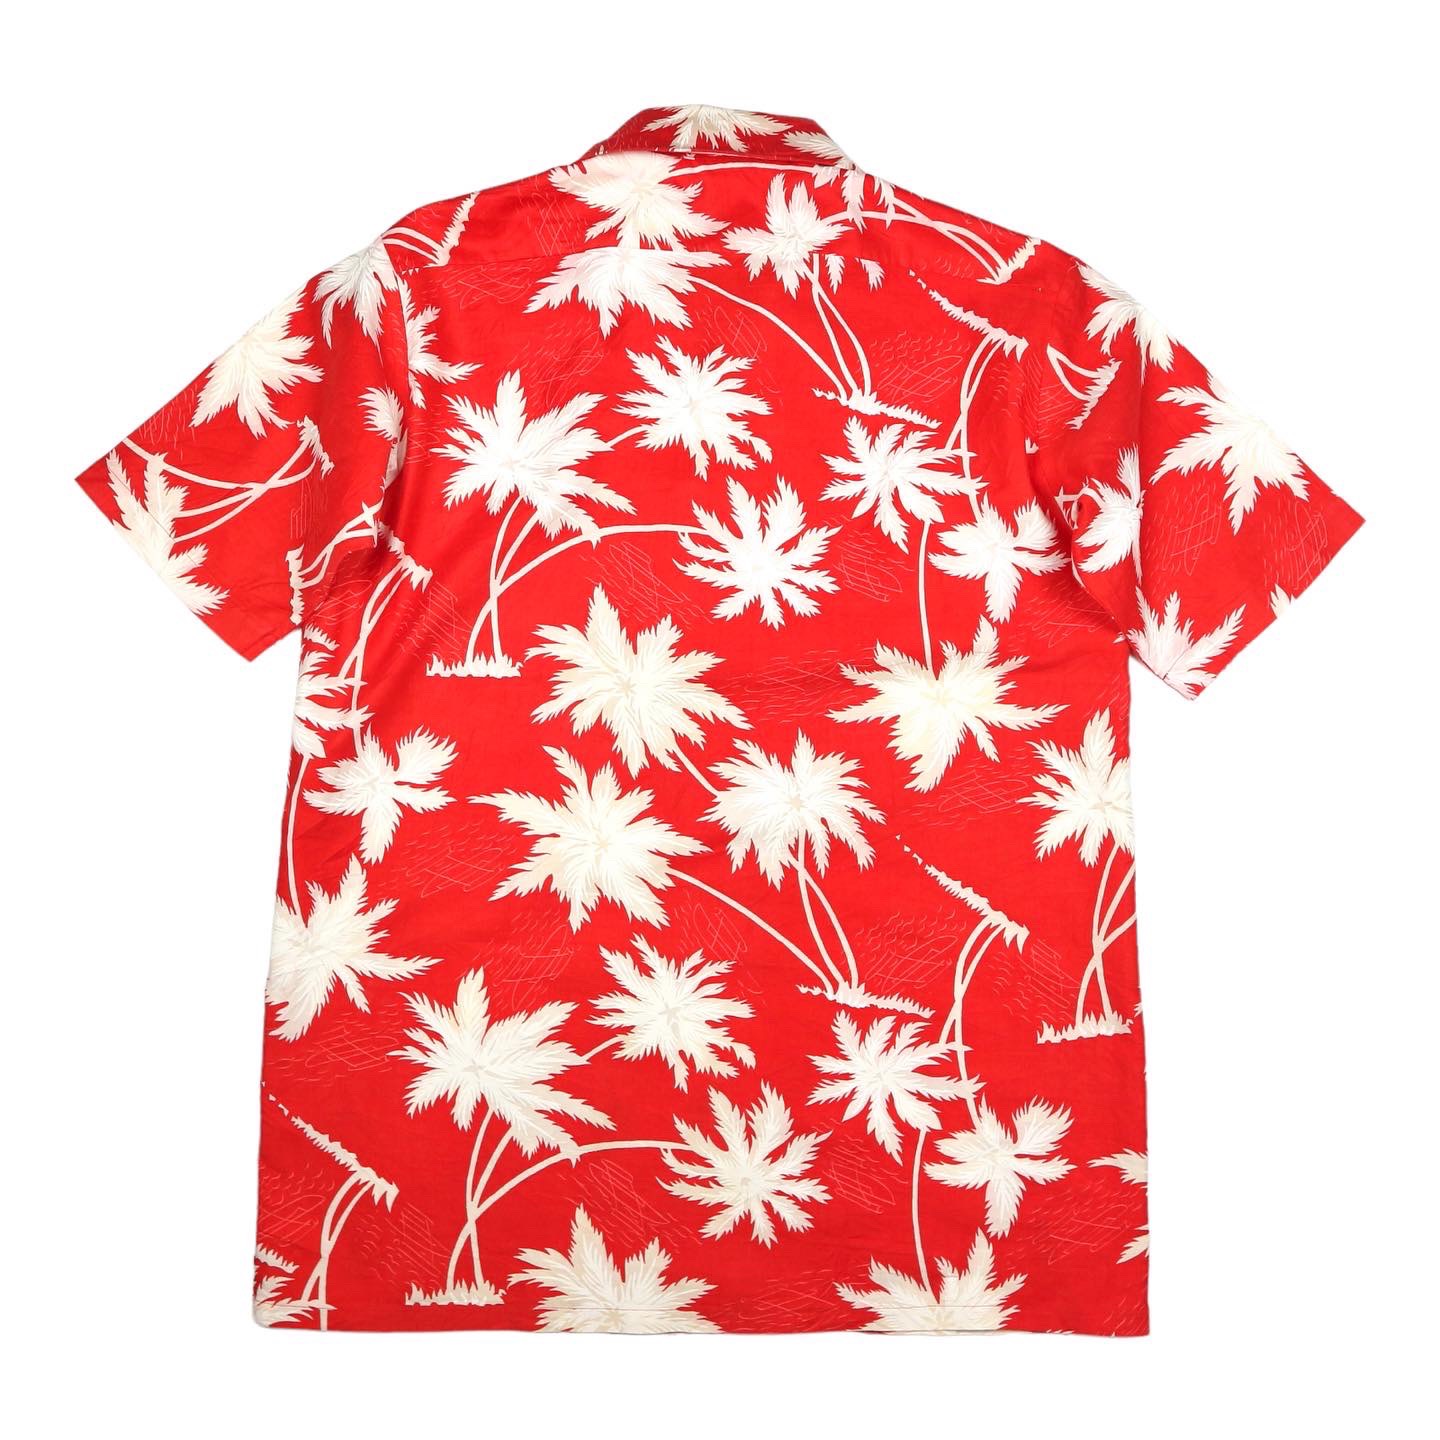 Tom Hawaiian Shirt Size M